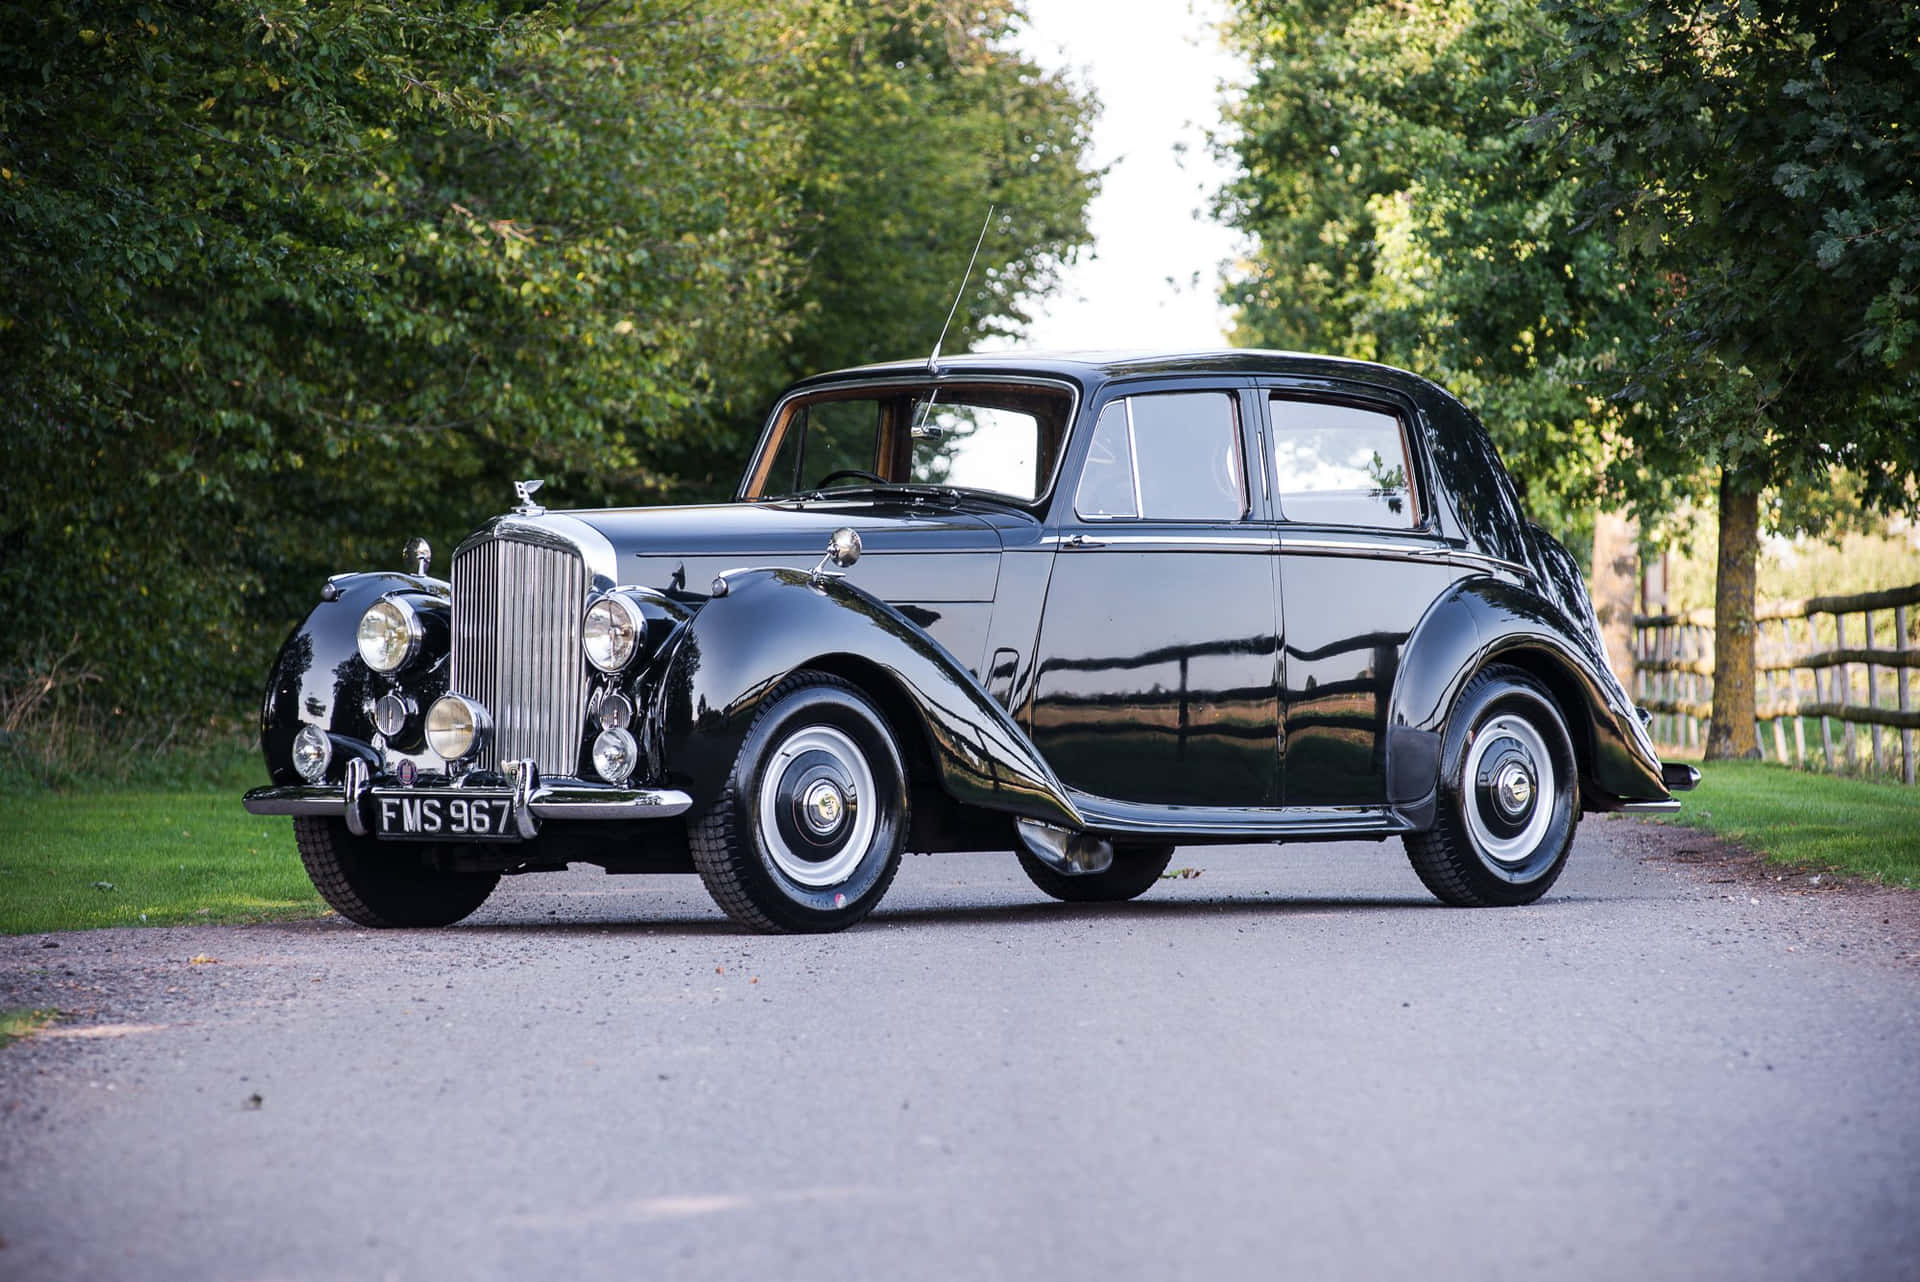 Caption: Stunning Classic Bentley Mark VI on Display Wallpaper